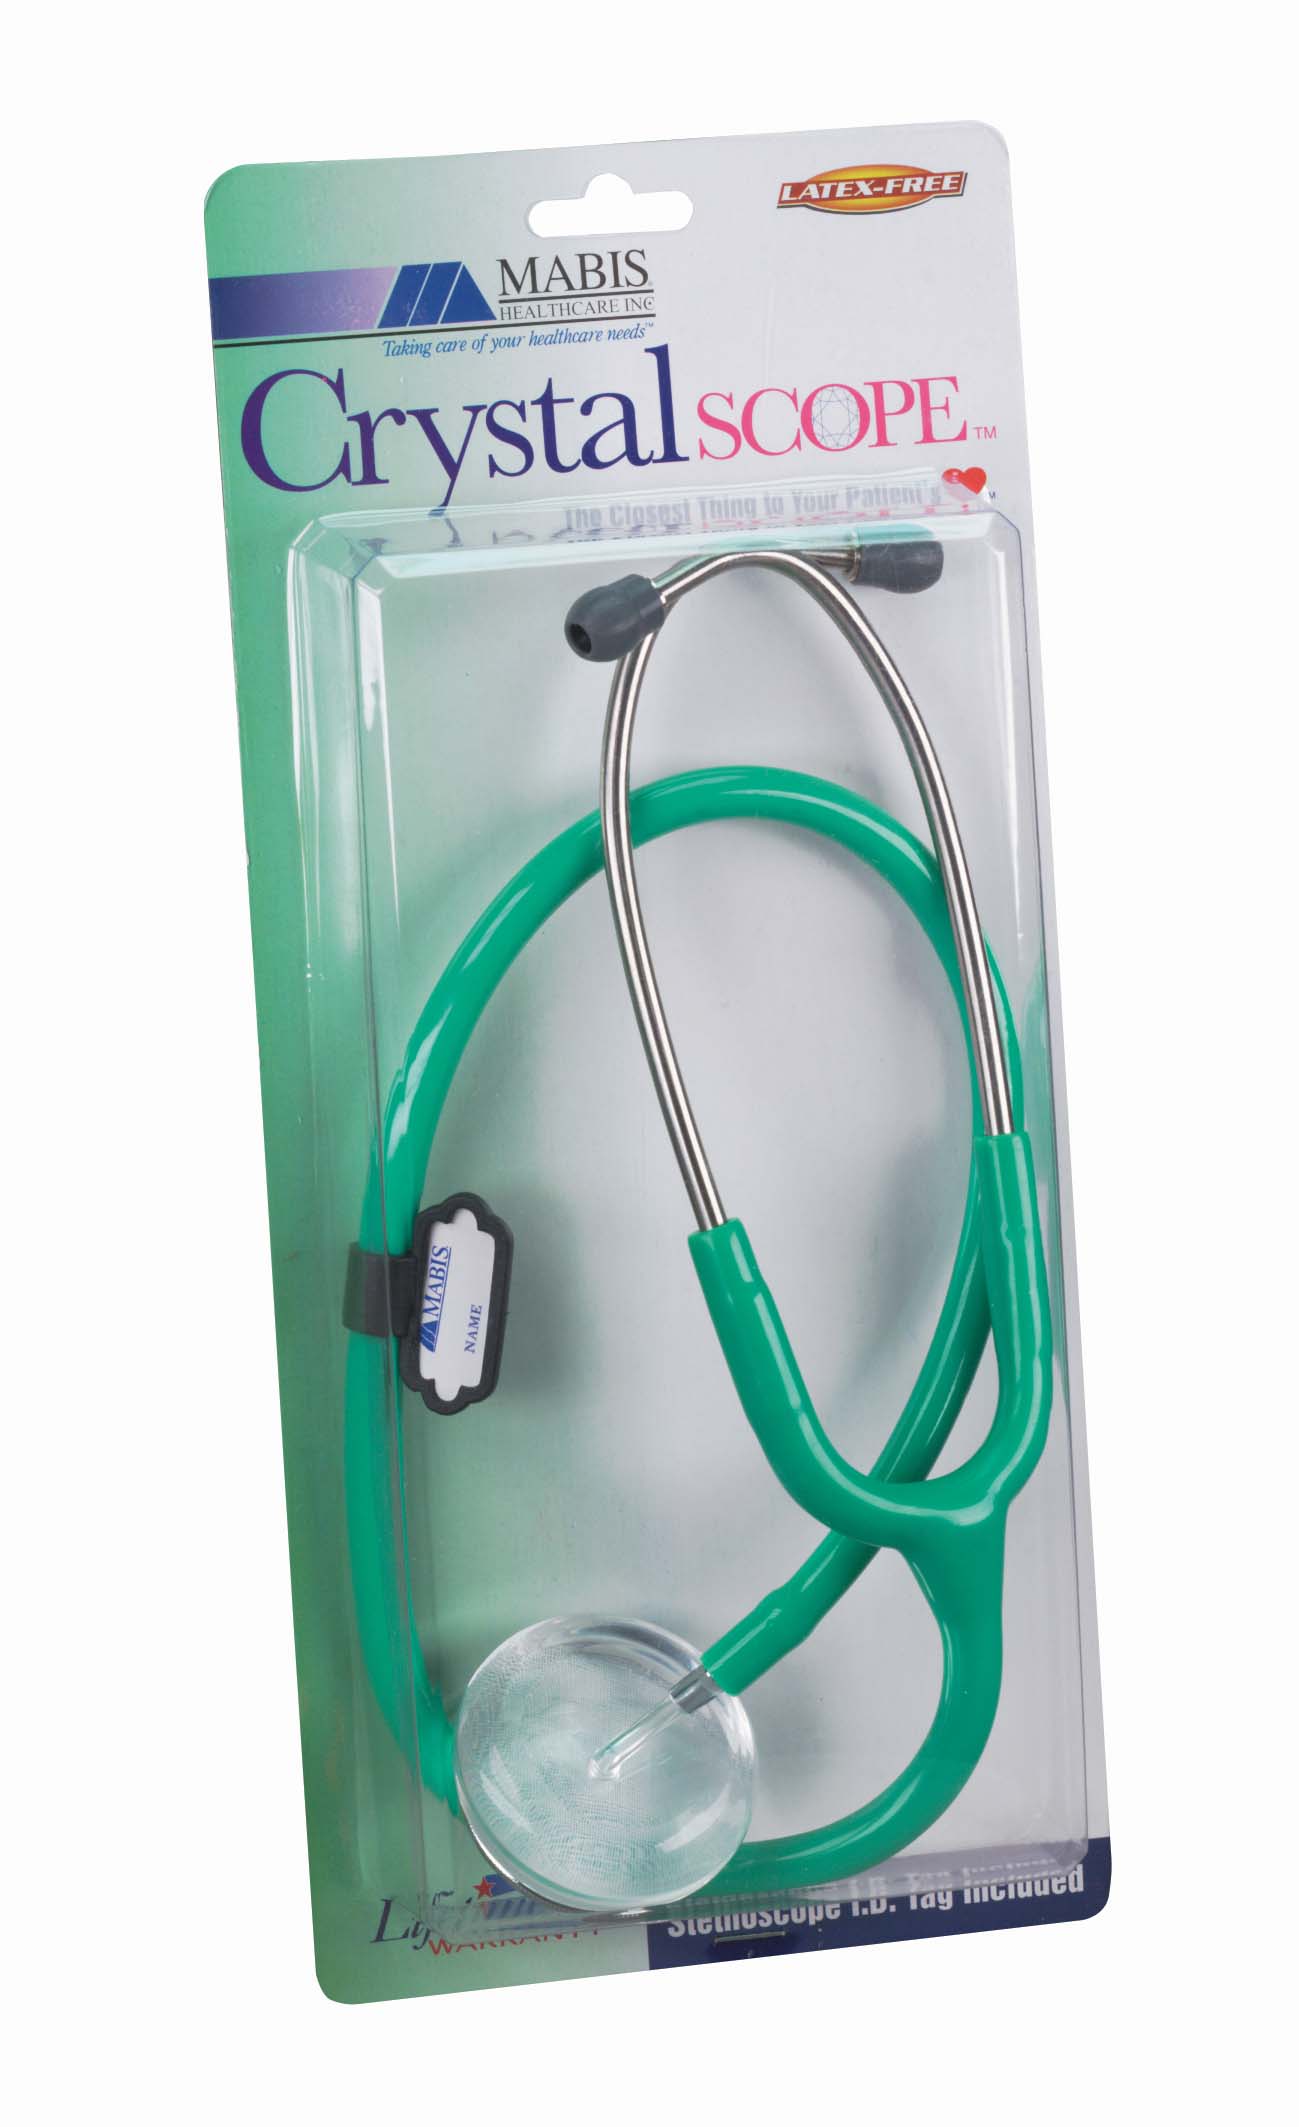 crystalscope-stethoscope-adult-onyx-10-460-330-lr-2.jpg